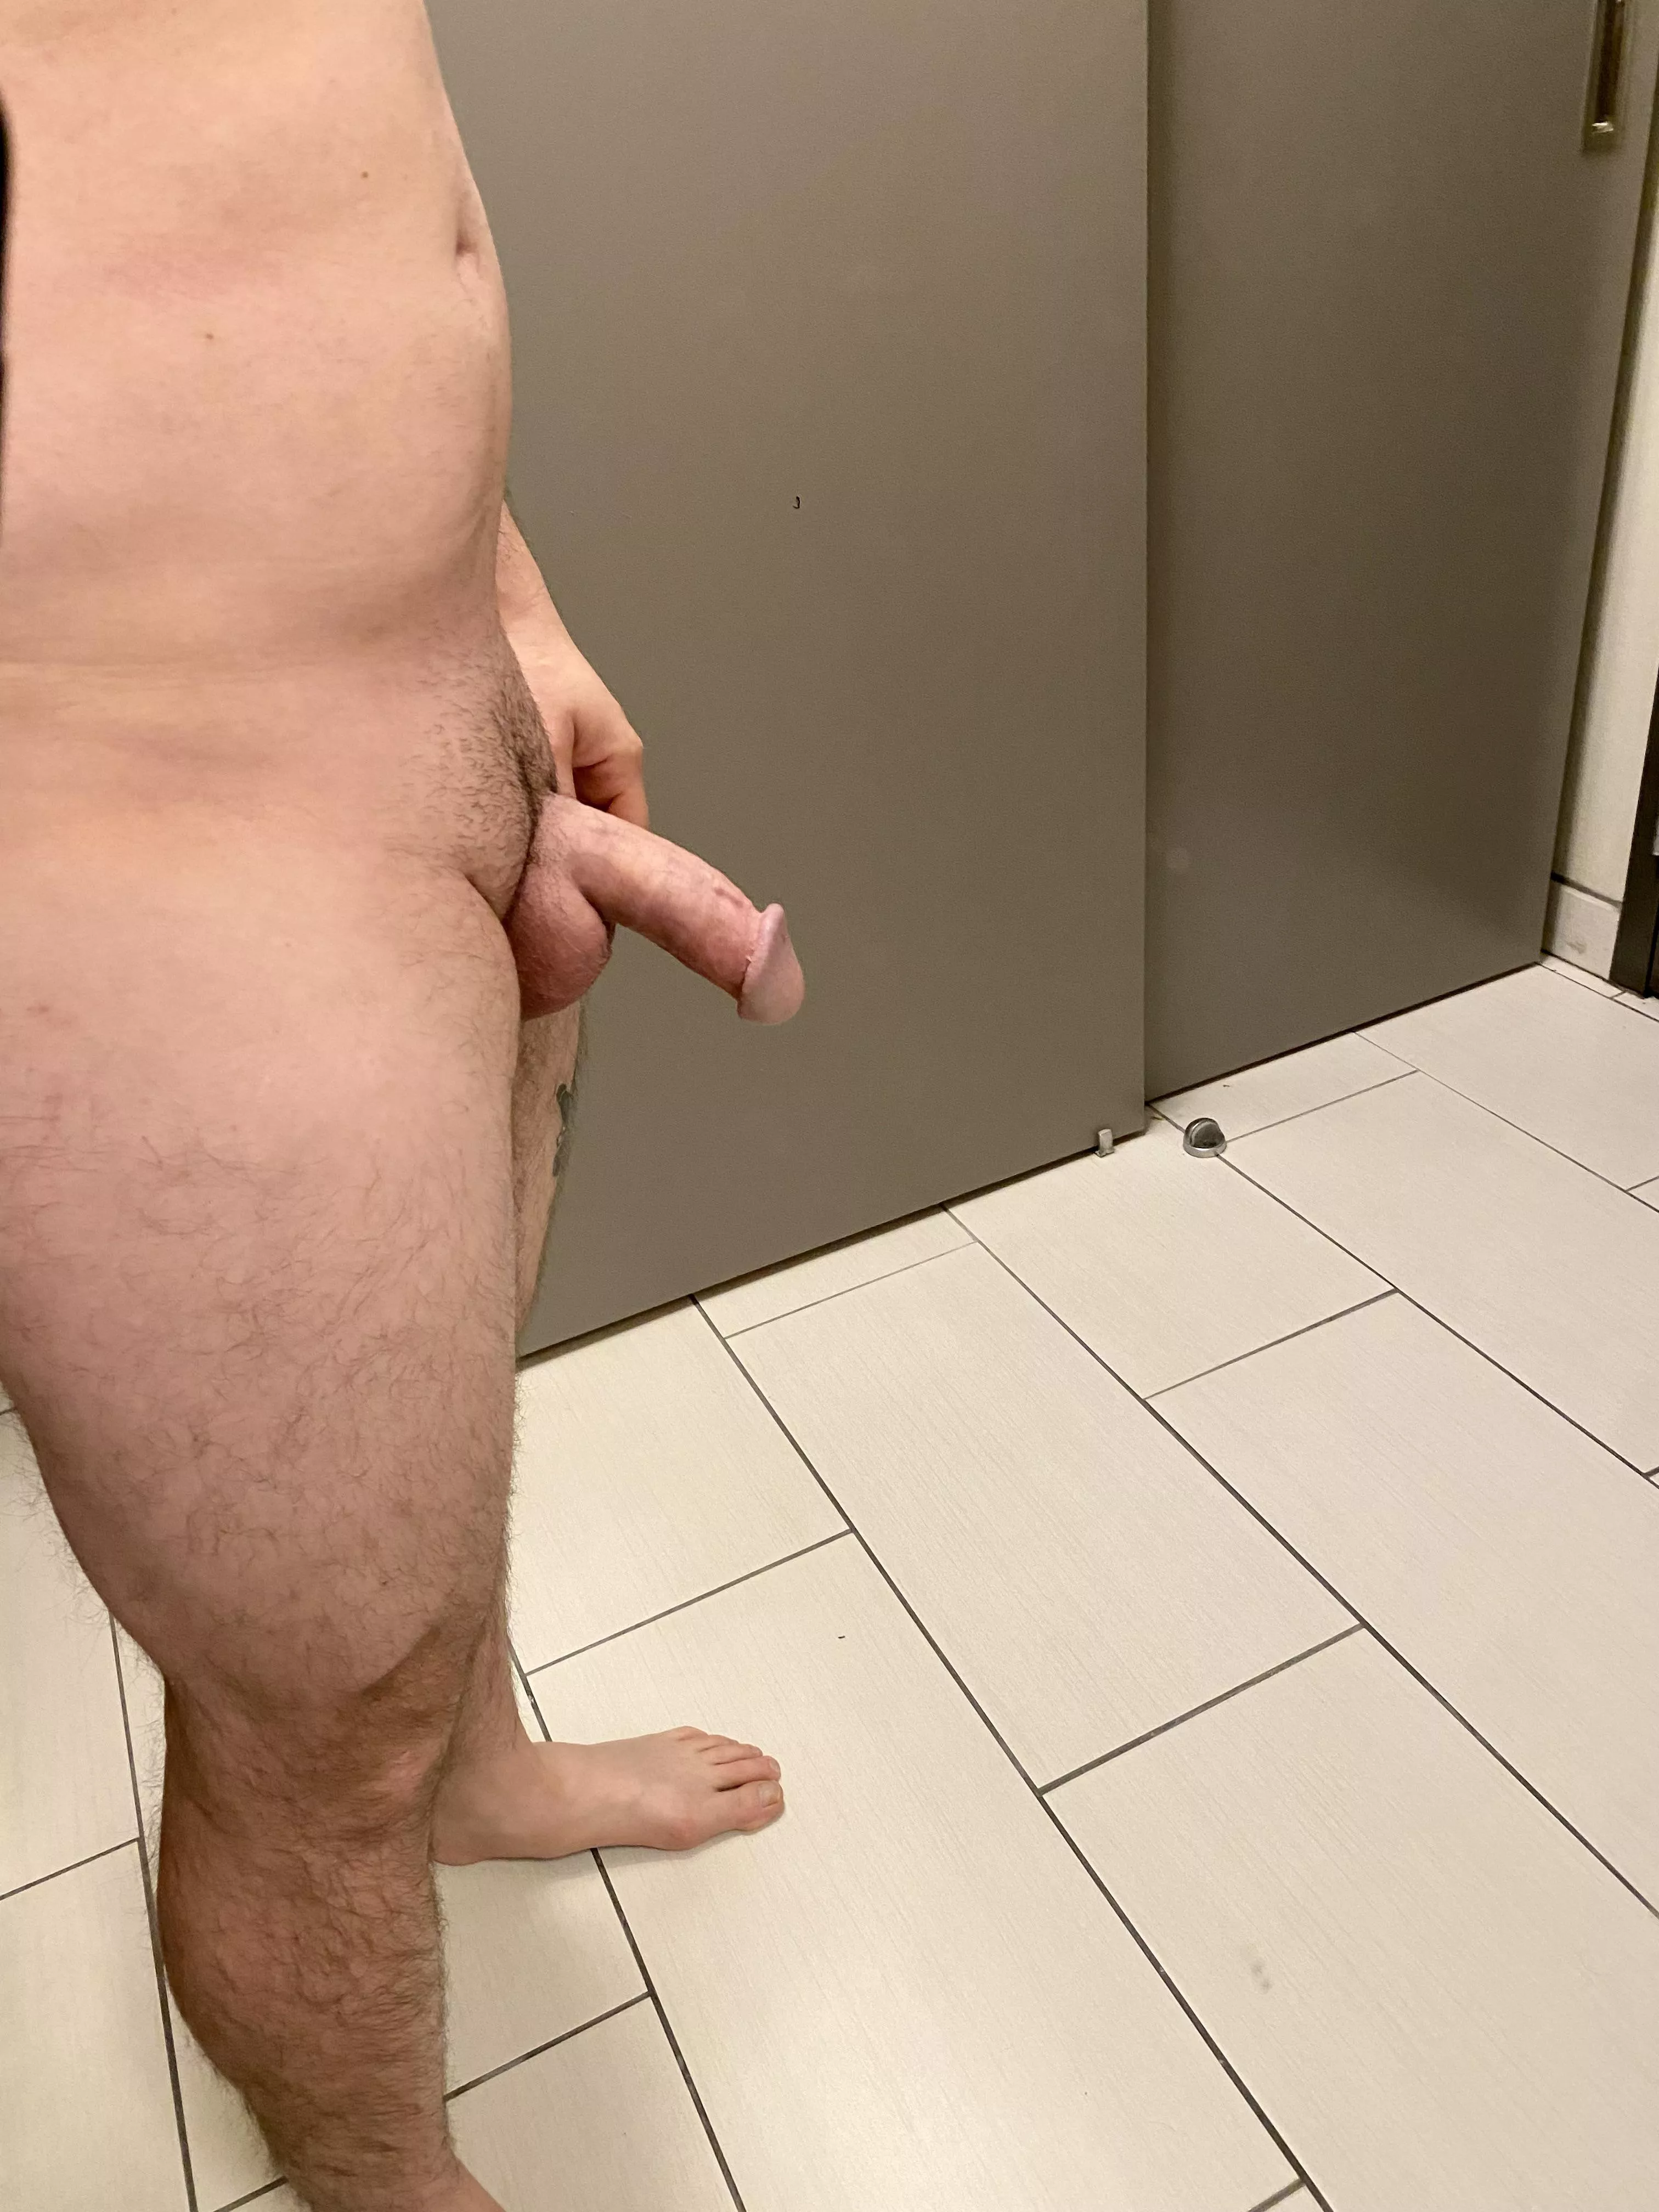 Naked Morning Chub Pics My Xxx Hot Girl